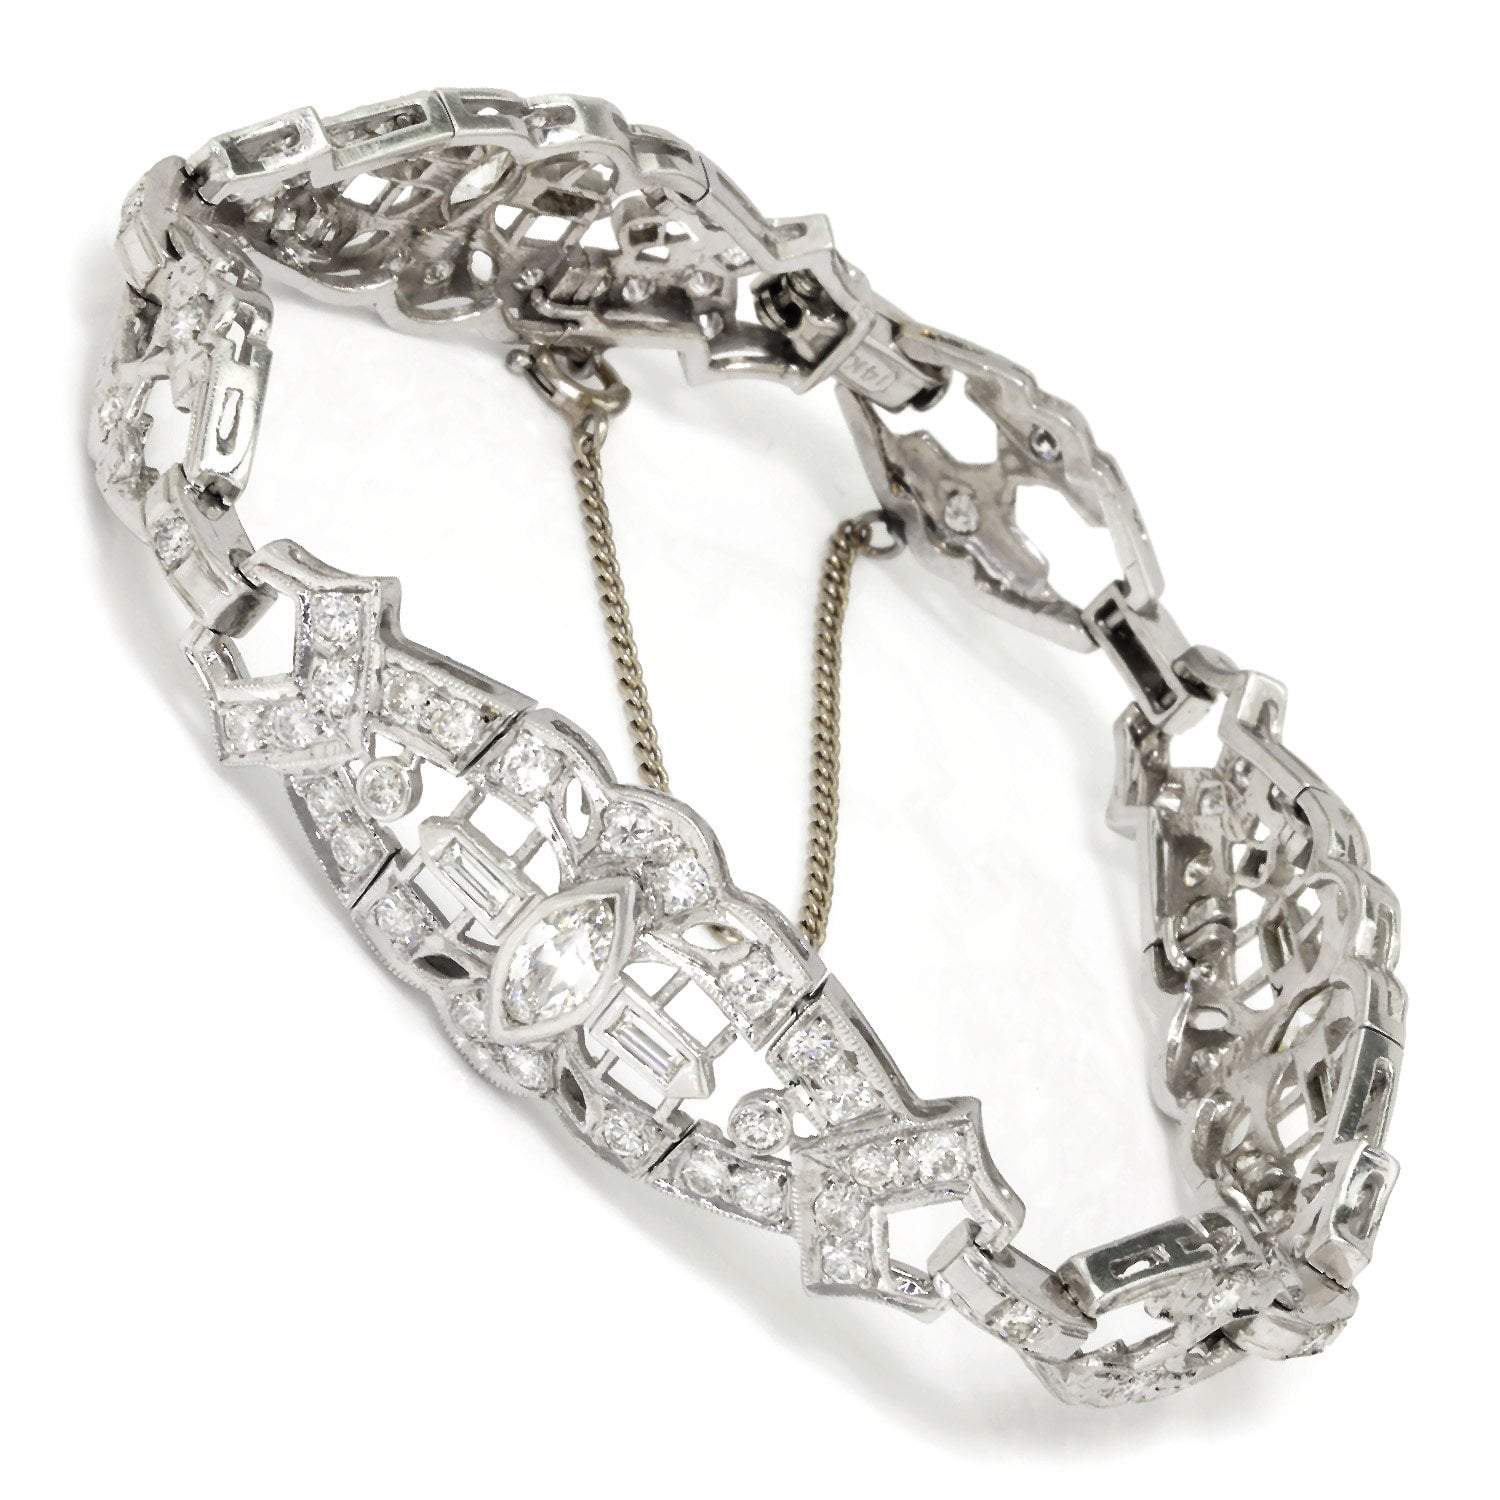 12 Carat Diamond 1920's Art Deco Bracelet Platinum